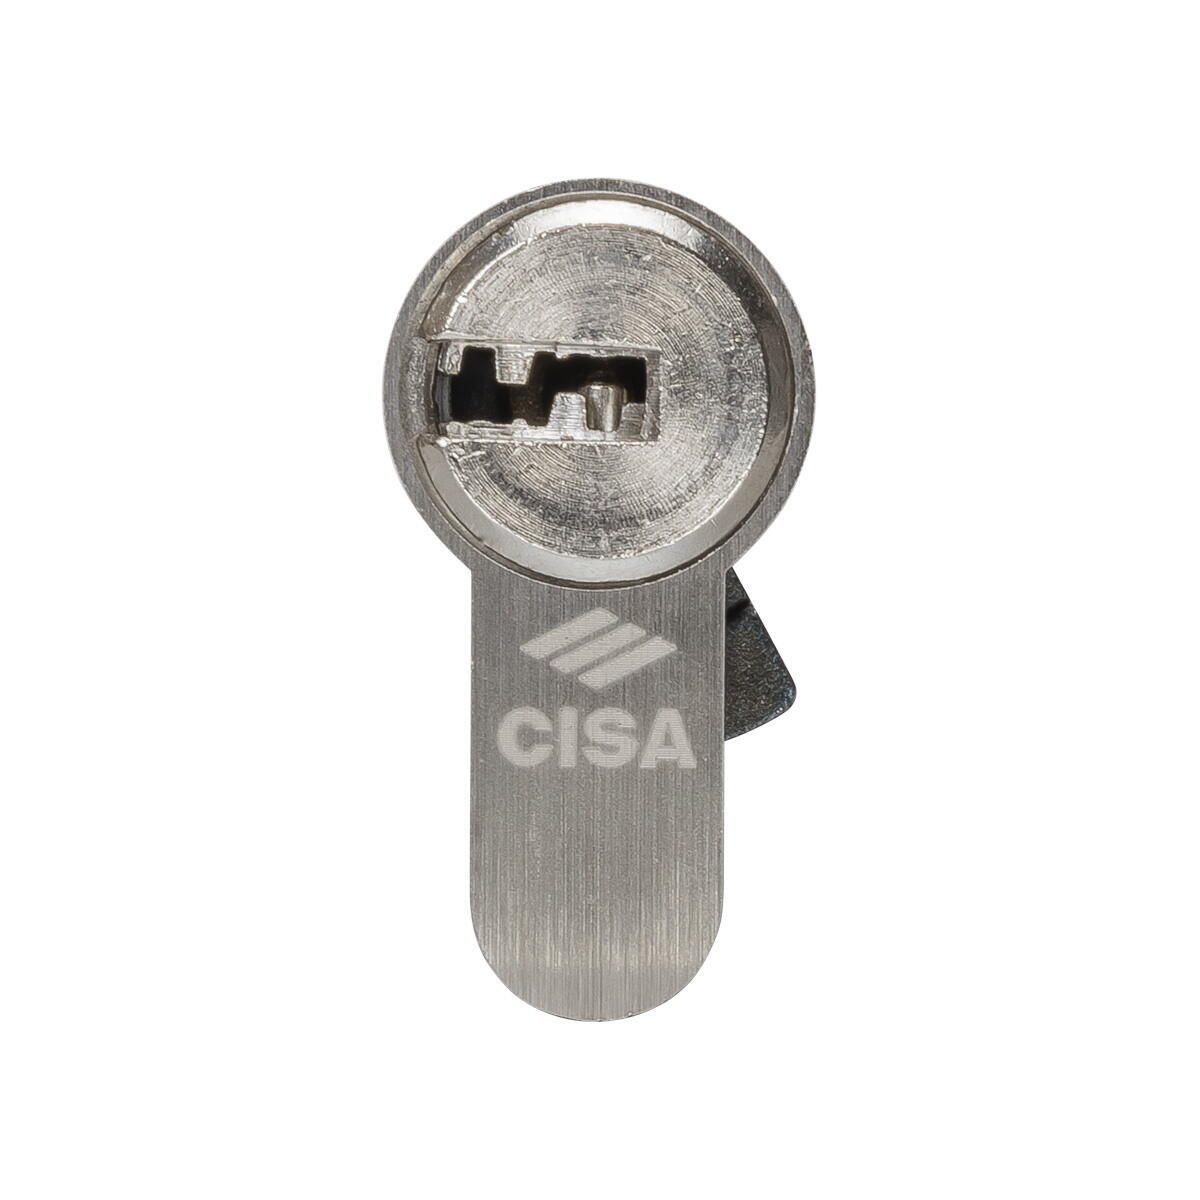 Cilindro Europeo CISA ASIX EASY 27 + 27 mm, 2 ingressi chiave in ottone nichelato - 2